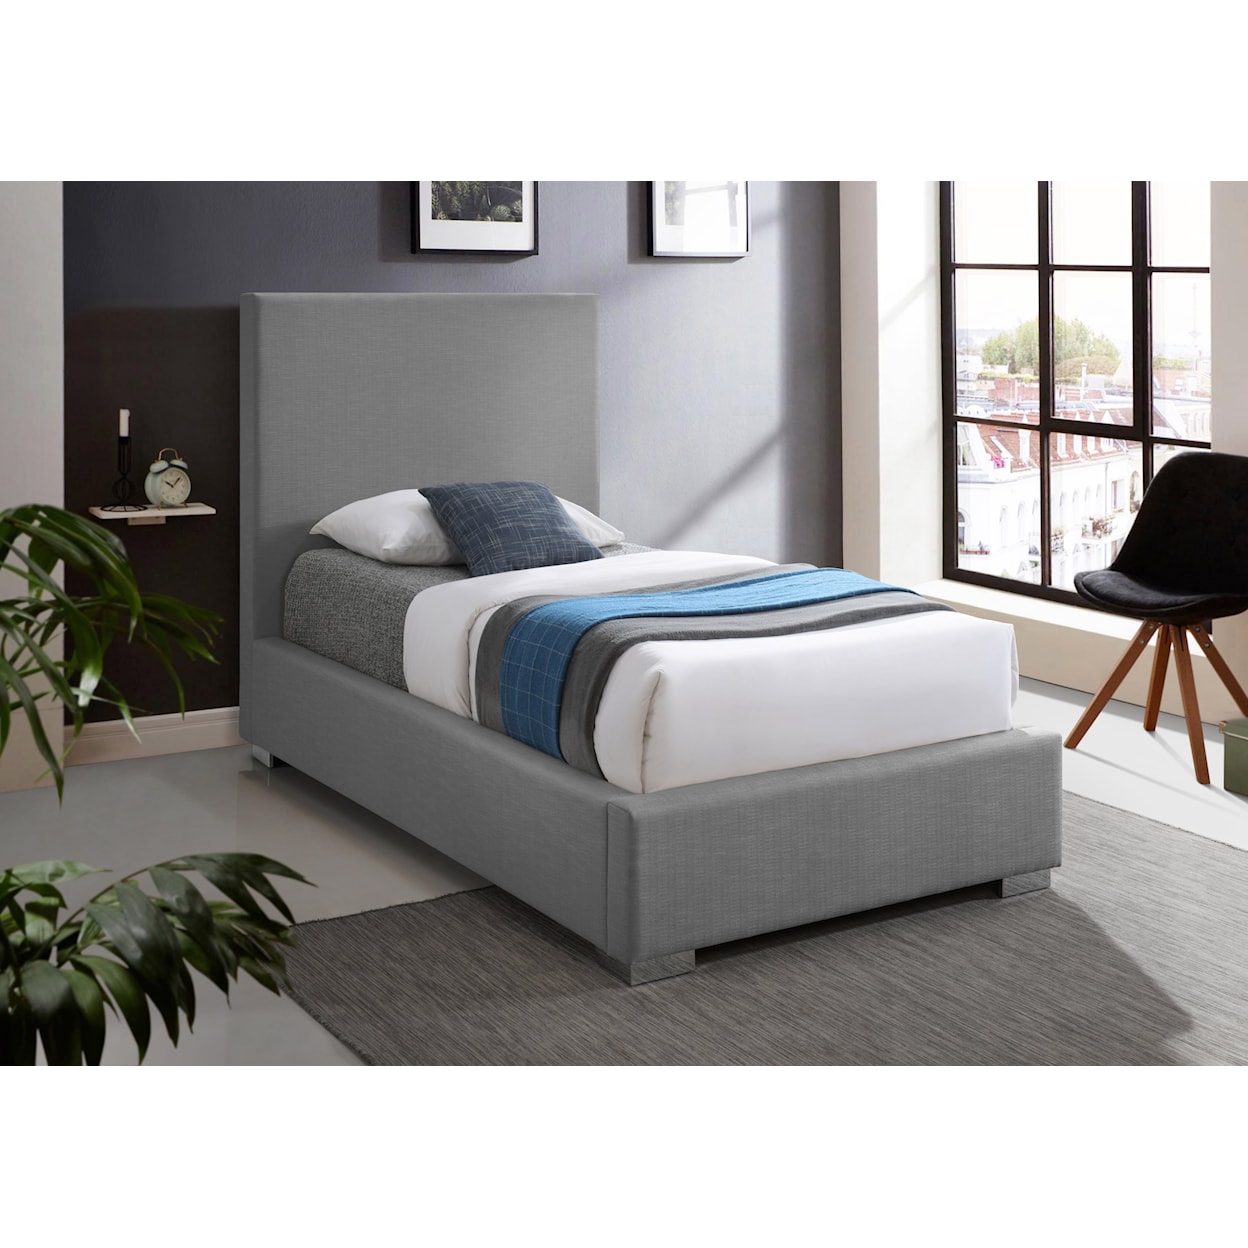 Meridian Furniture Crosby Twin Bed